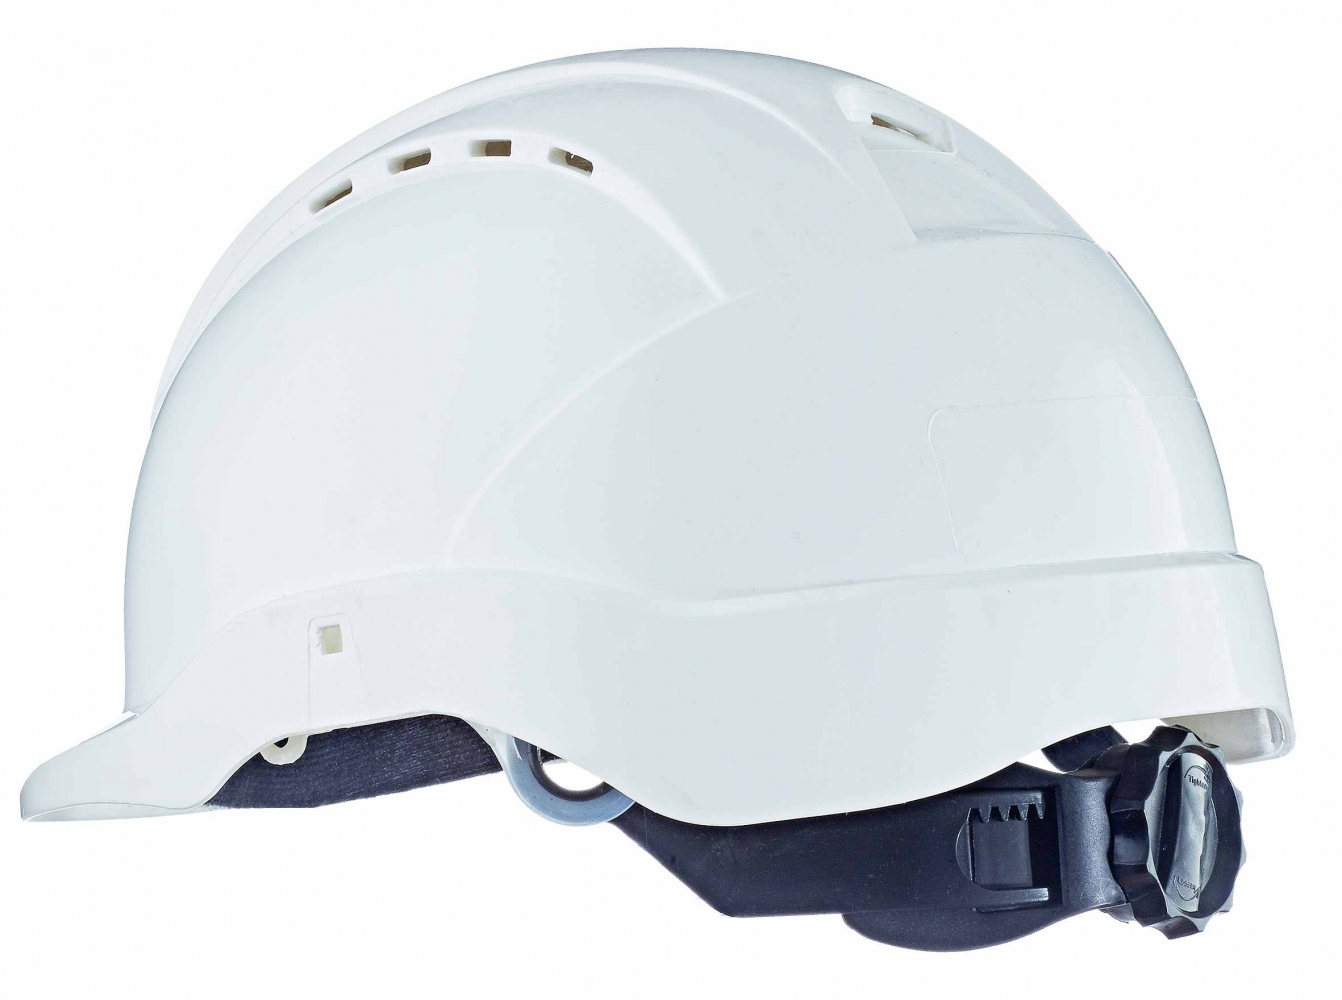 pics/Feldtmann 2016/Kopfschutz/helmets/tector-4003-industrial-safety-helmet-en-397.jpg